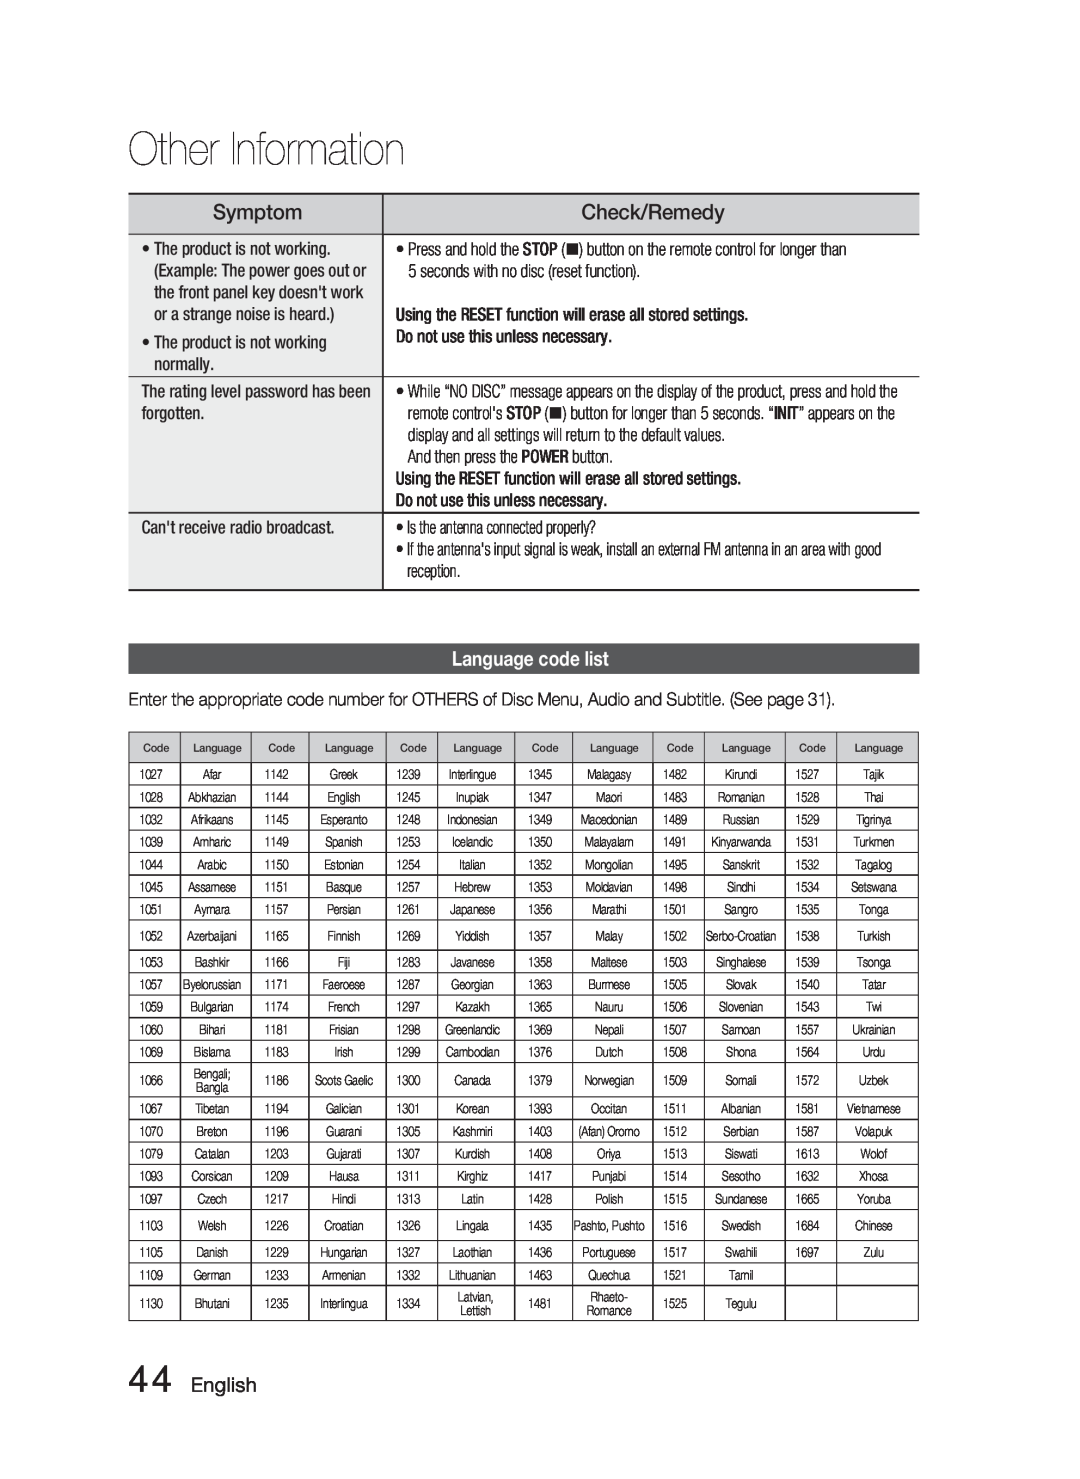 Samsung HT-C550-XAC user manual Check/Remedy, Language code list, English, Other Information, Symptom 